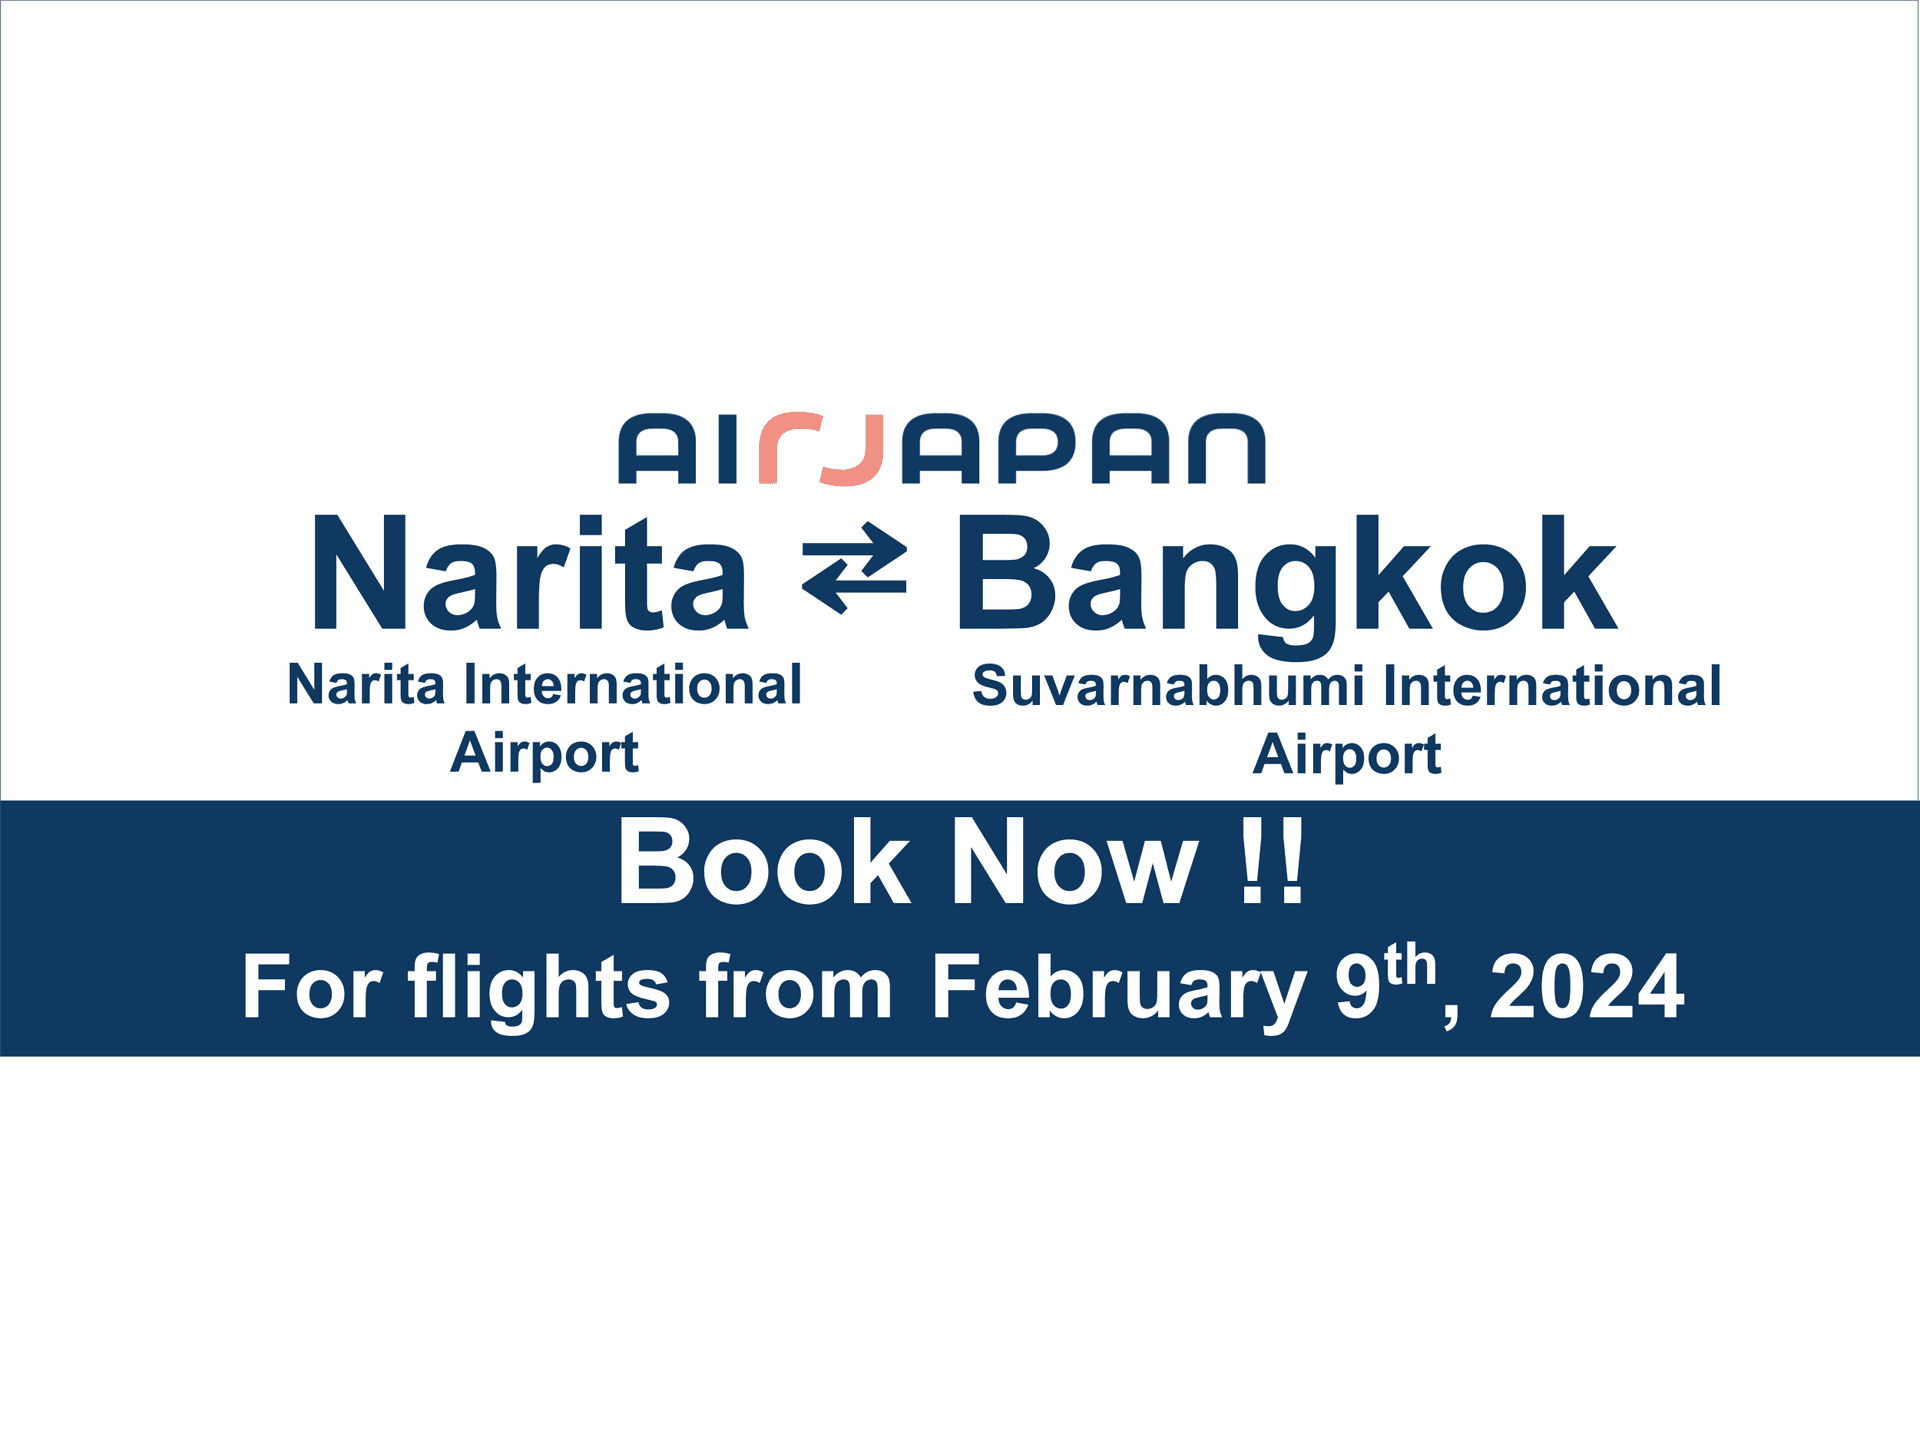 AirJapan will hold direct flight Narita and Bangkok on 9th February 2024.